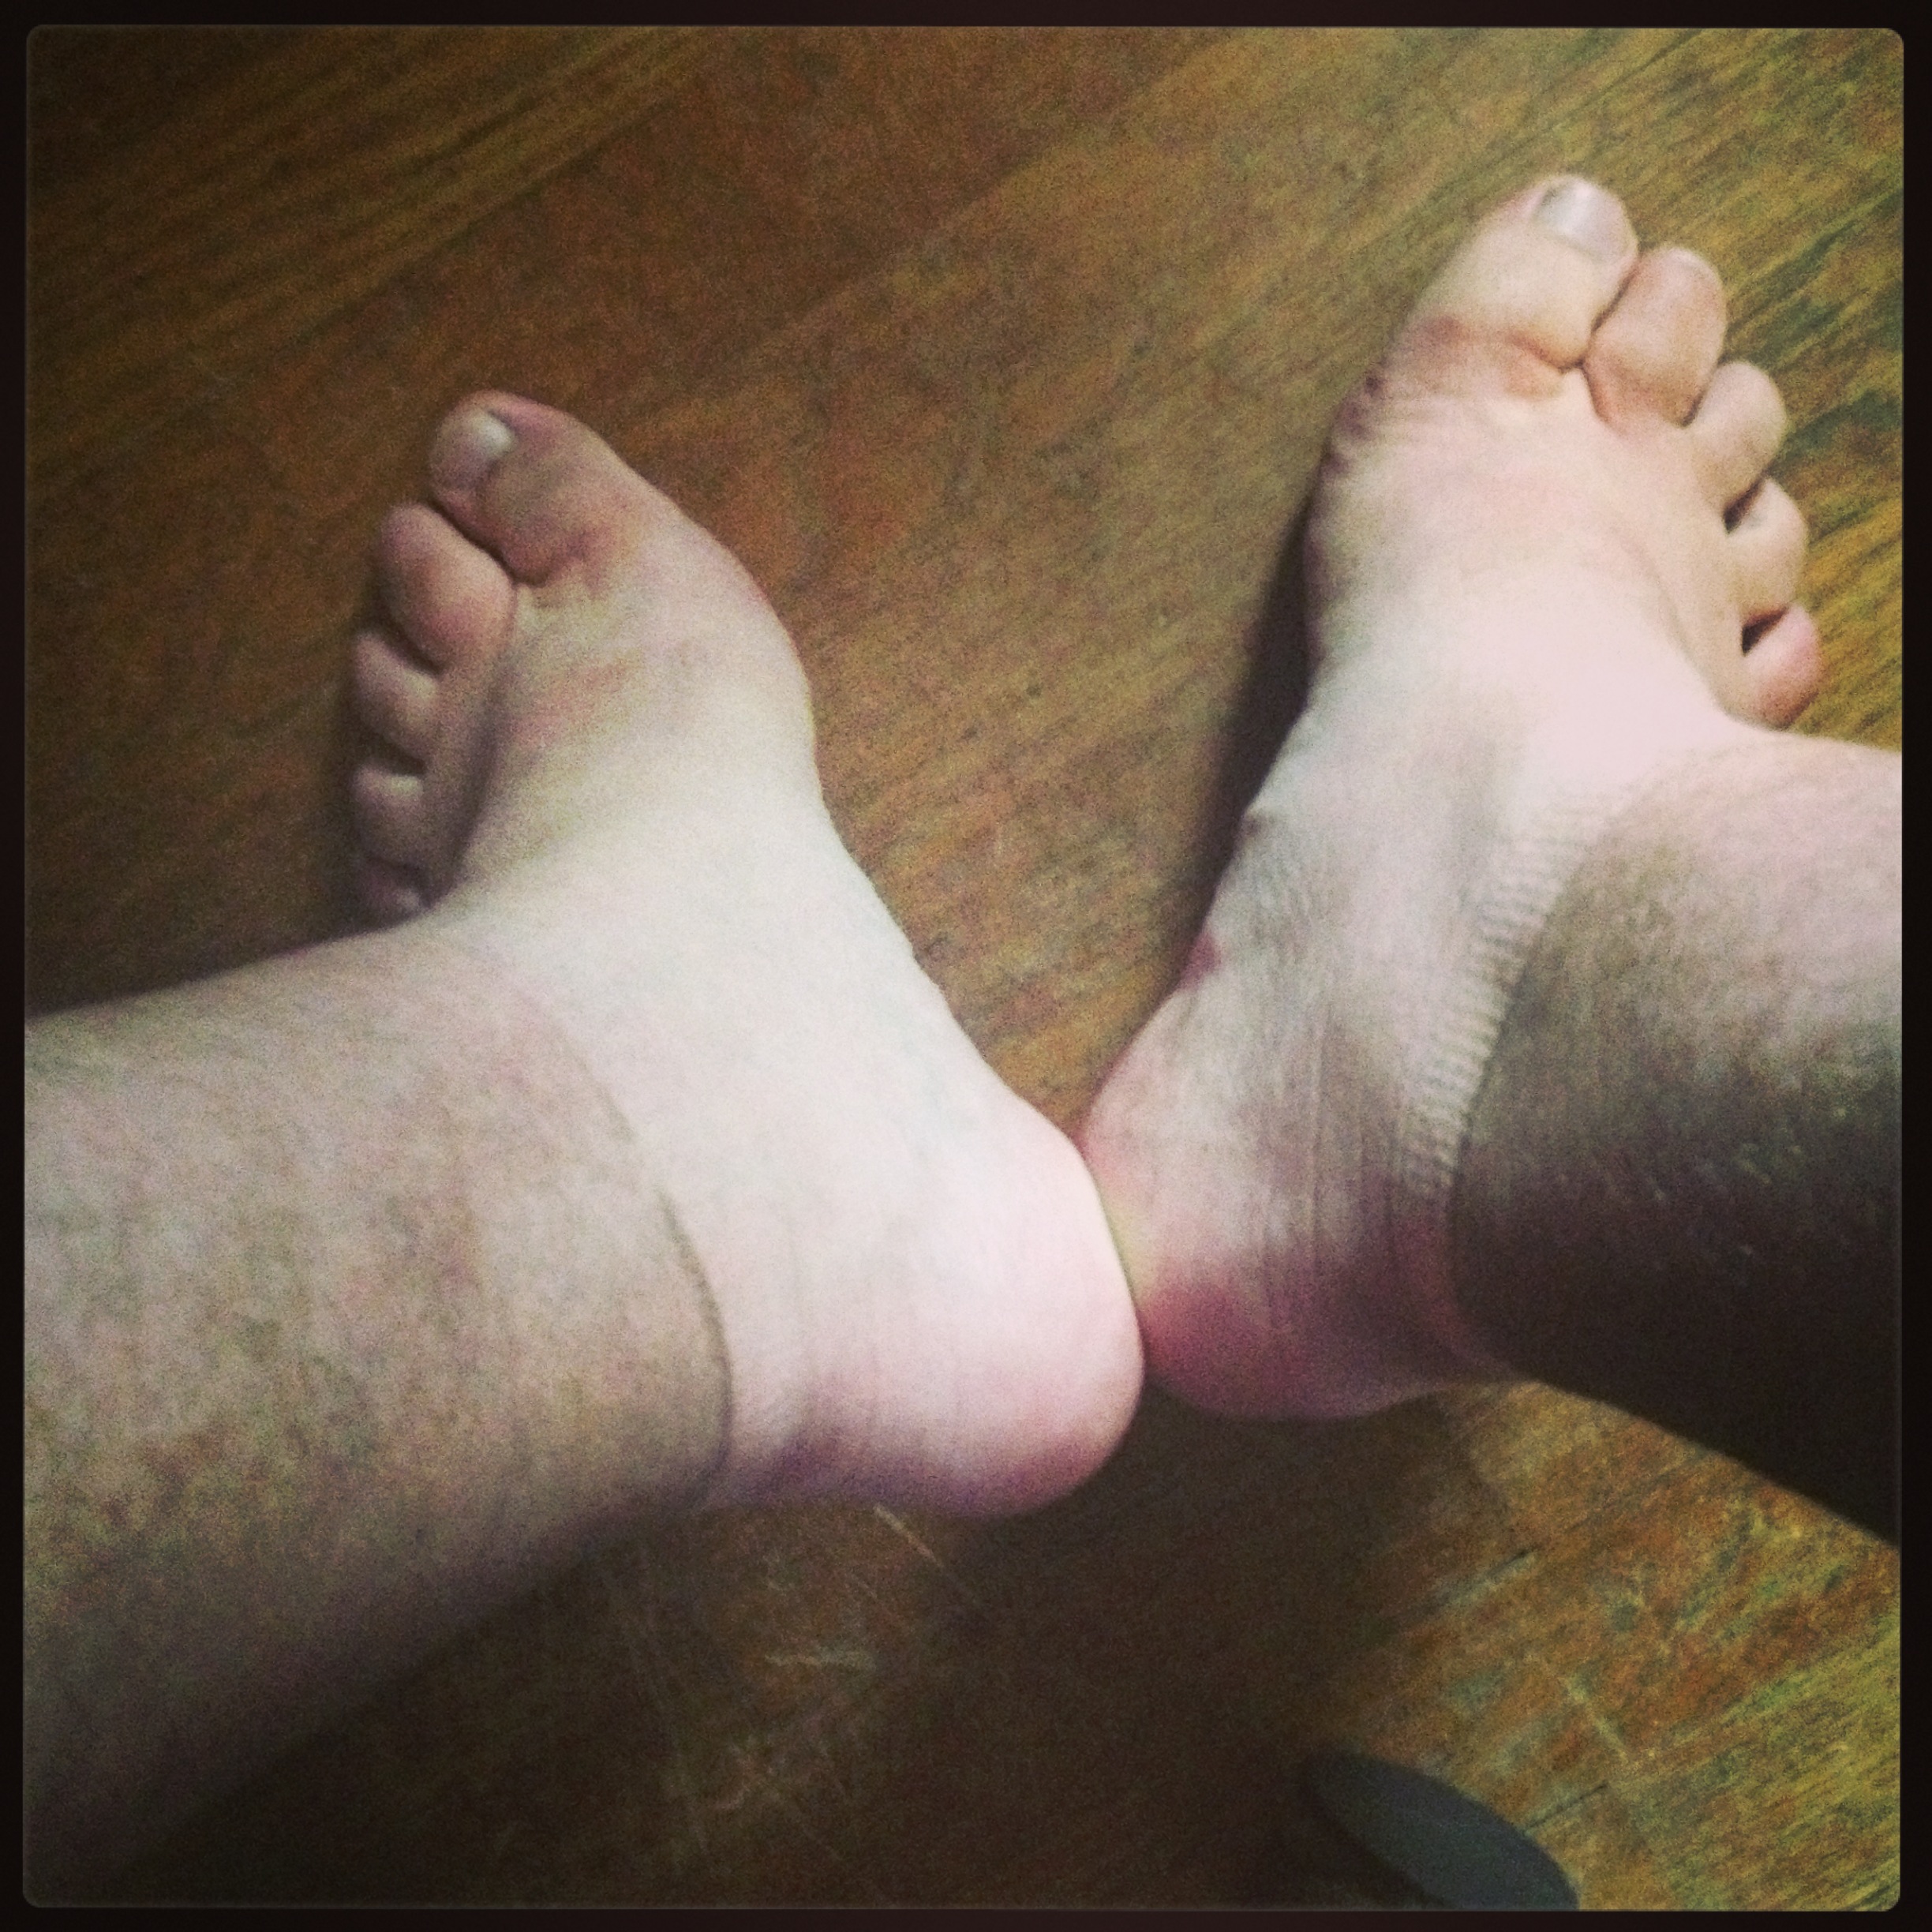 2013-08-19-walking-makes-my-legs-dirty